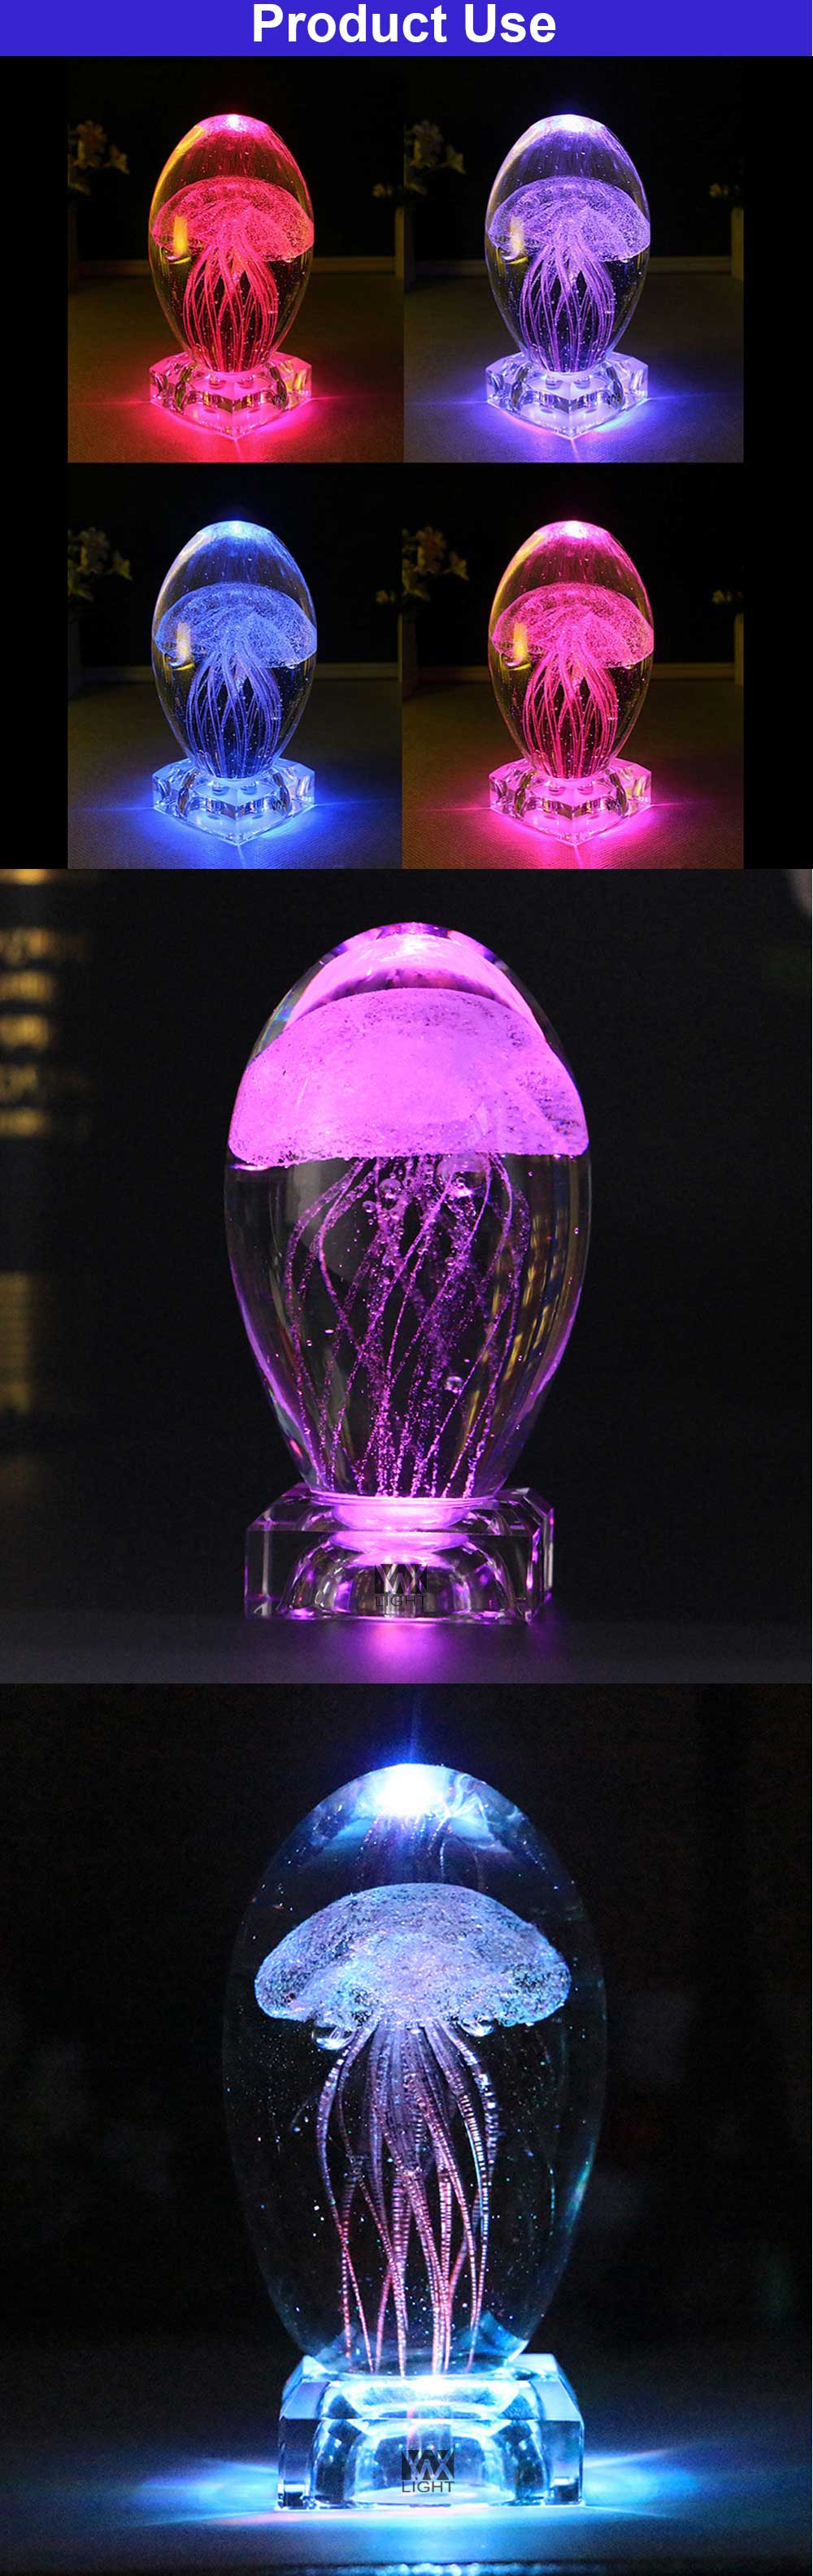 YWXLight 0.7W DC 5V 3D Jellyfish Model LED Lighting Crystal Night Light